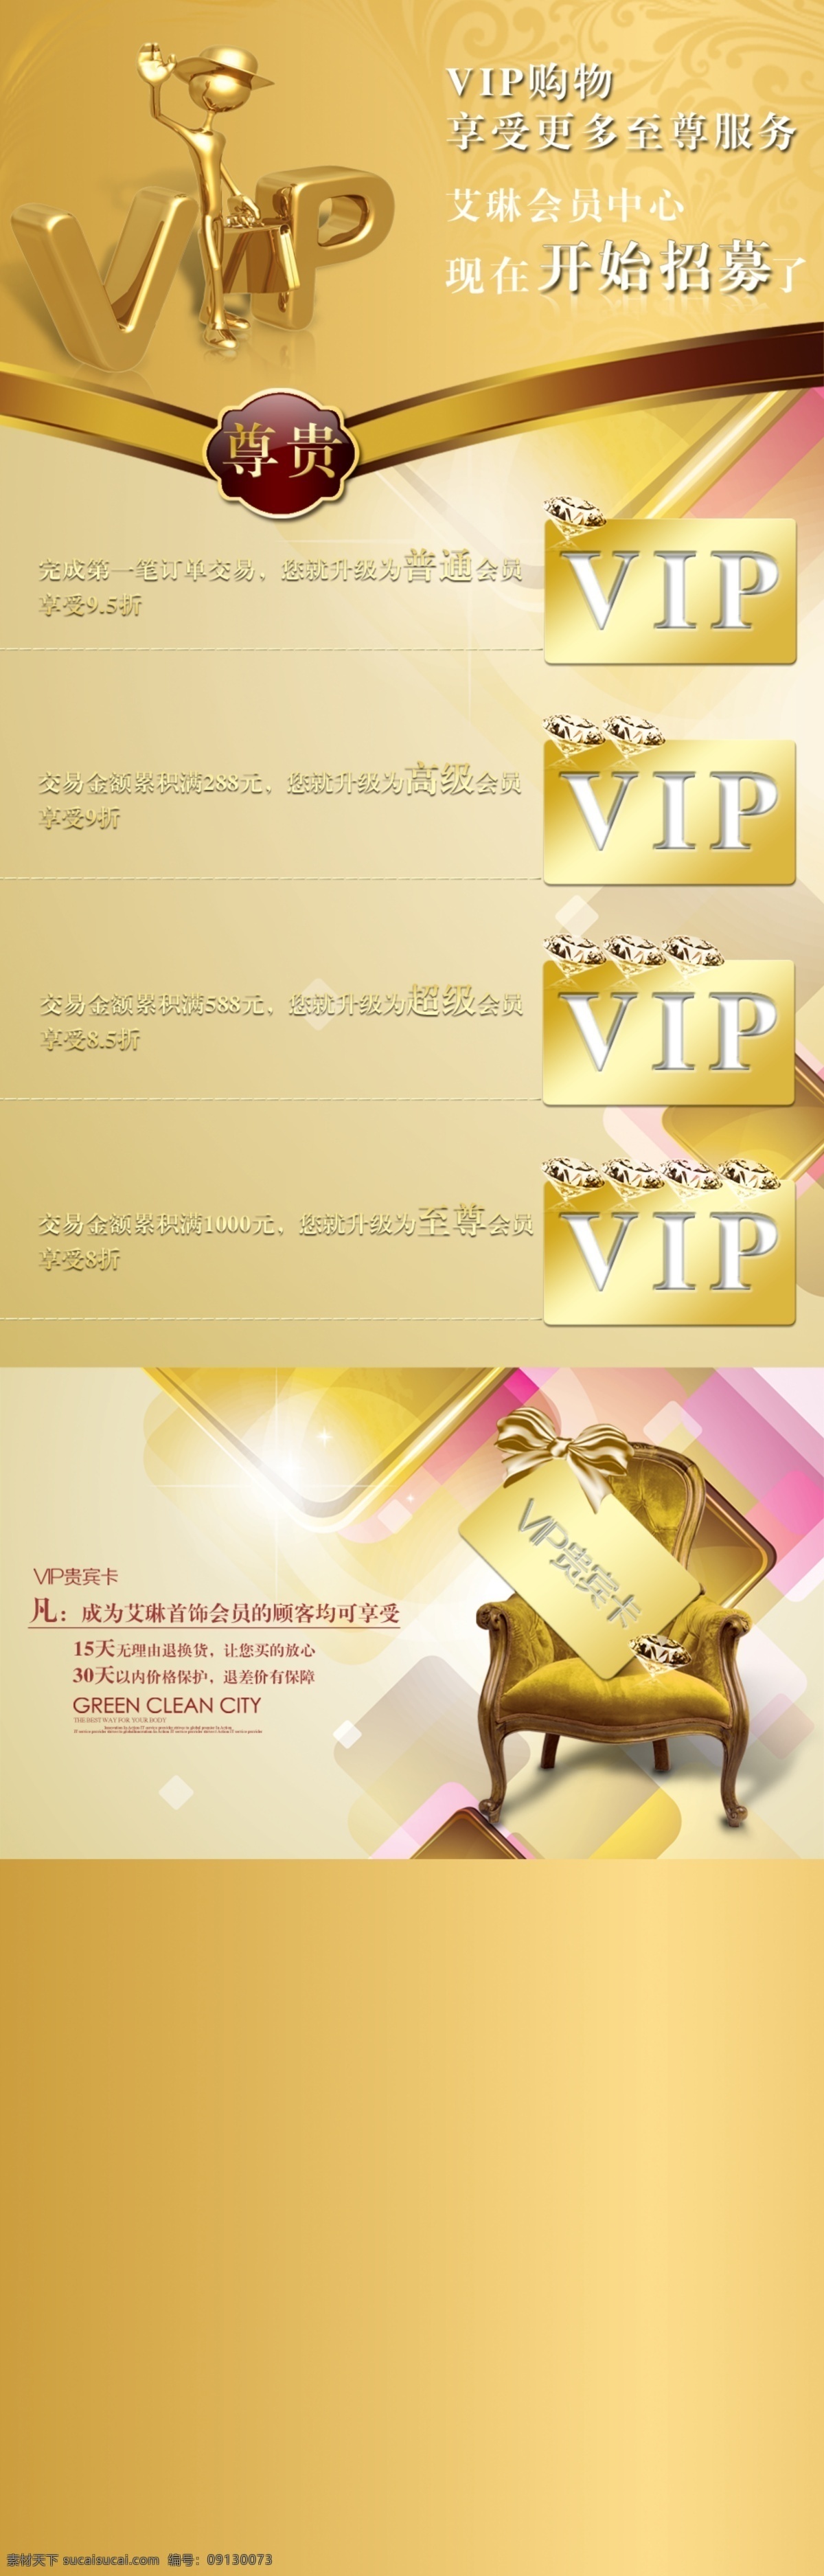 vip 卡 设计素材 金牌服务 金色 土豪金 尊贵 名片卡 vip会员卡